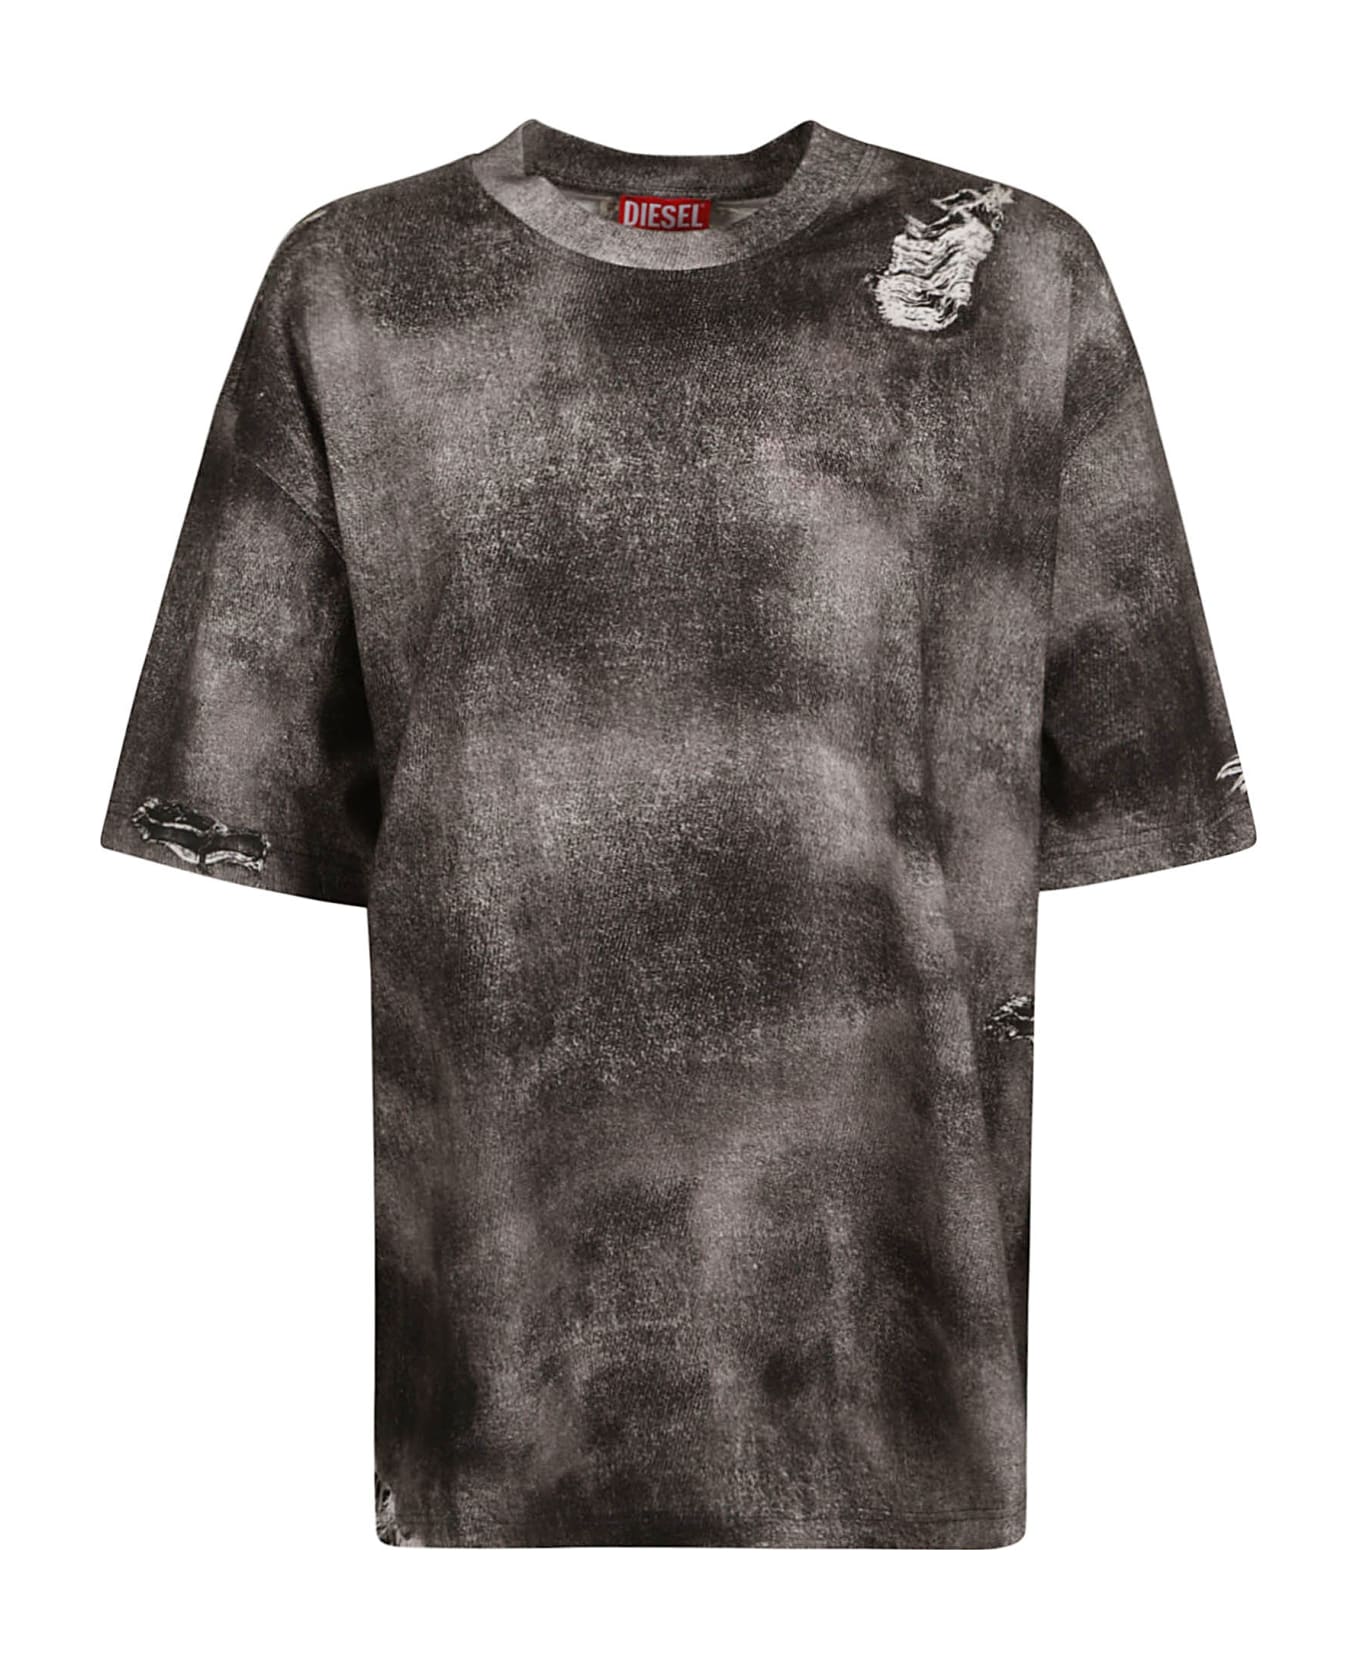 Diesel Distressed T-shirt - Non definito シャツ